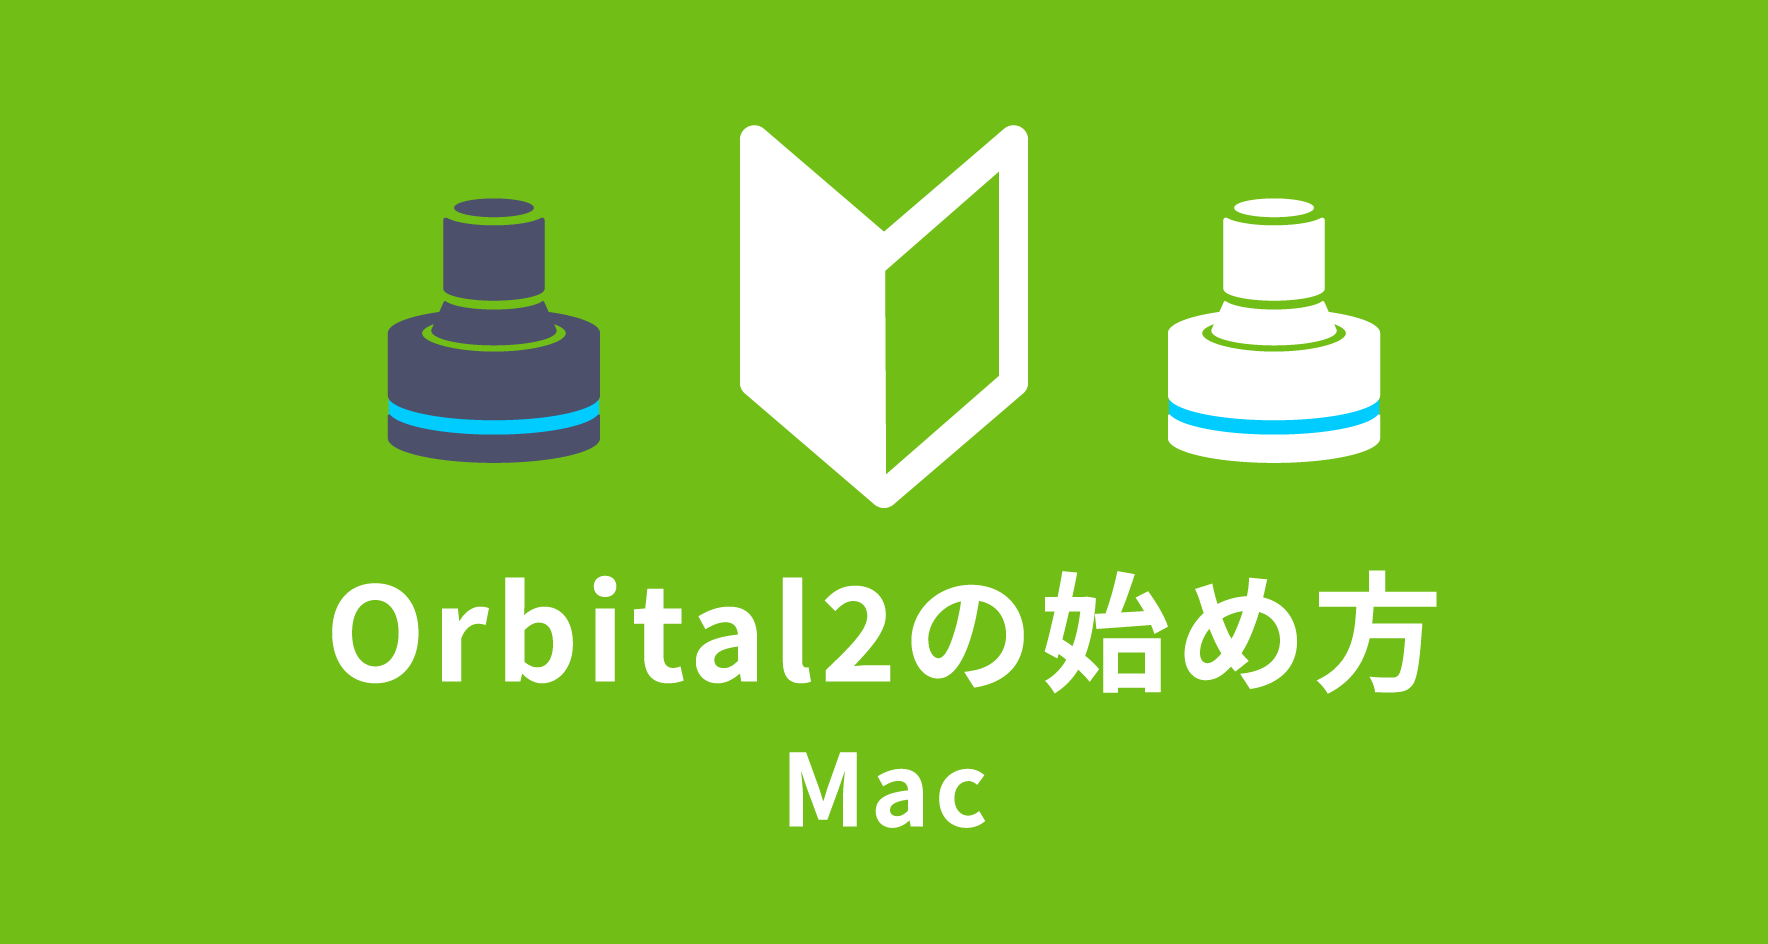 4. Orbital2 導入方法【Mac版】